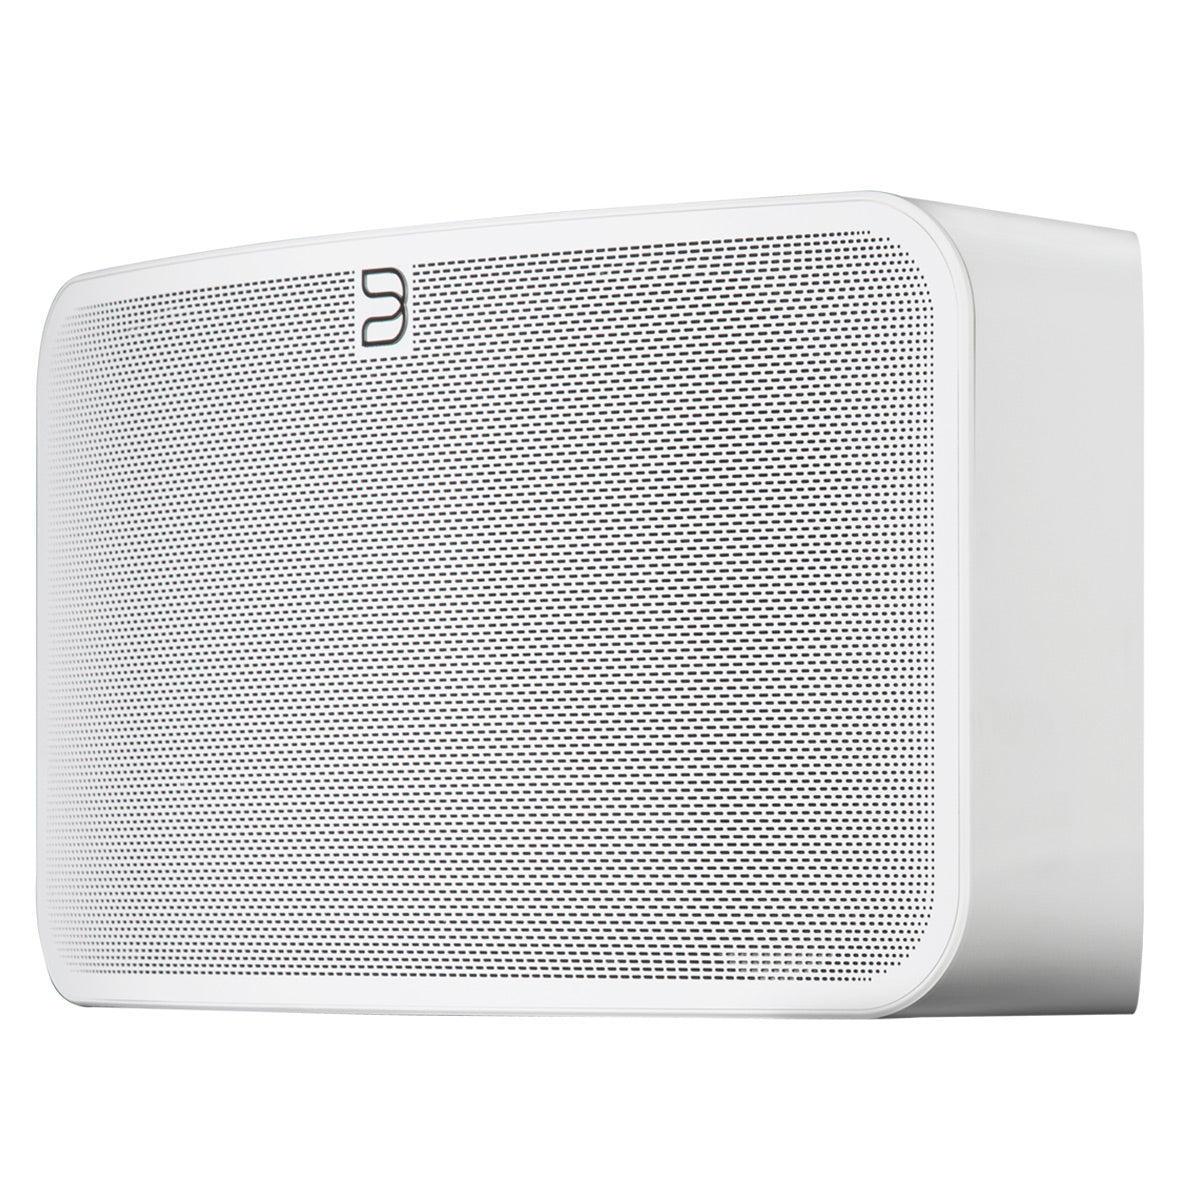 Bluesound PULSE MINI 2i Compact Wireless Streaming Speaker (White)